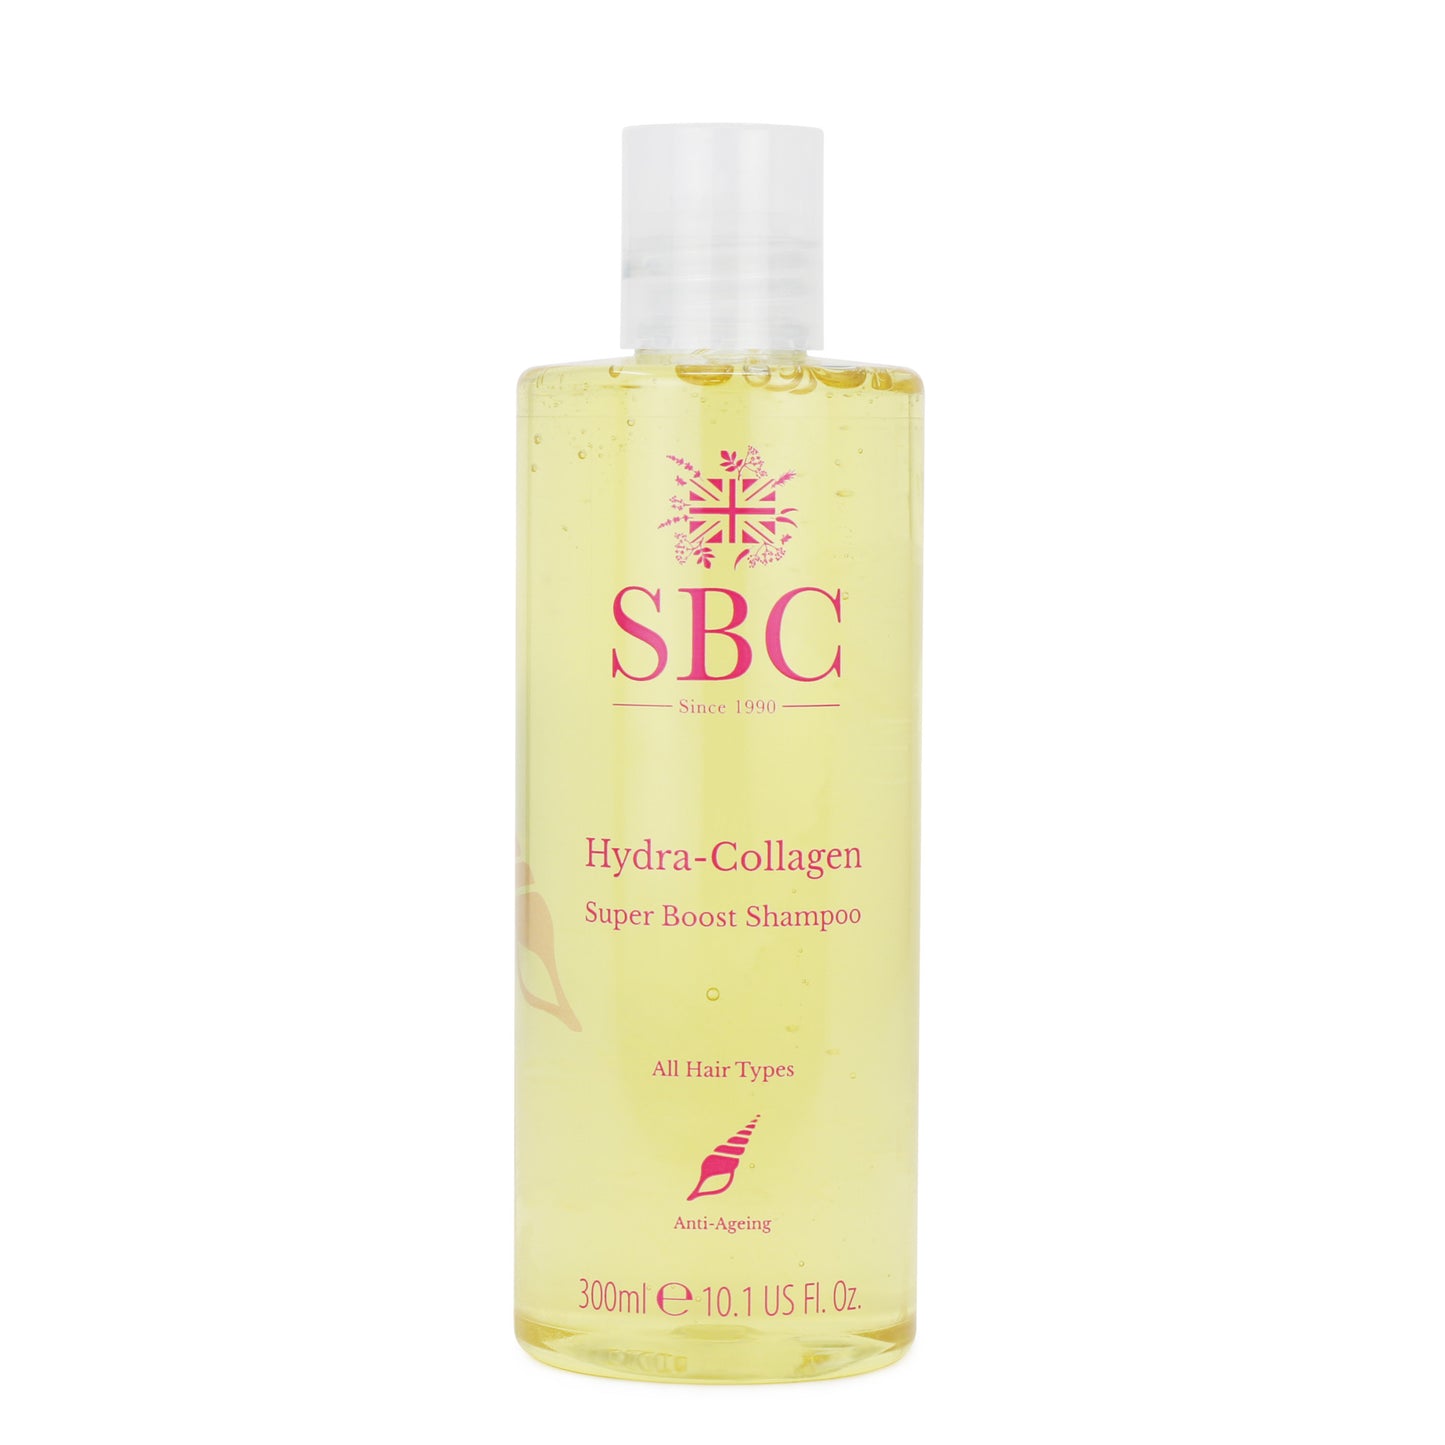 300ml Hydra-Collagen Super Boost Shampoo